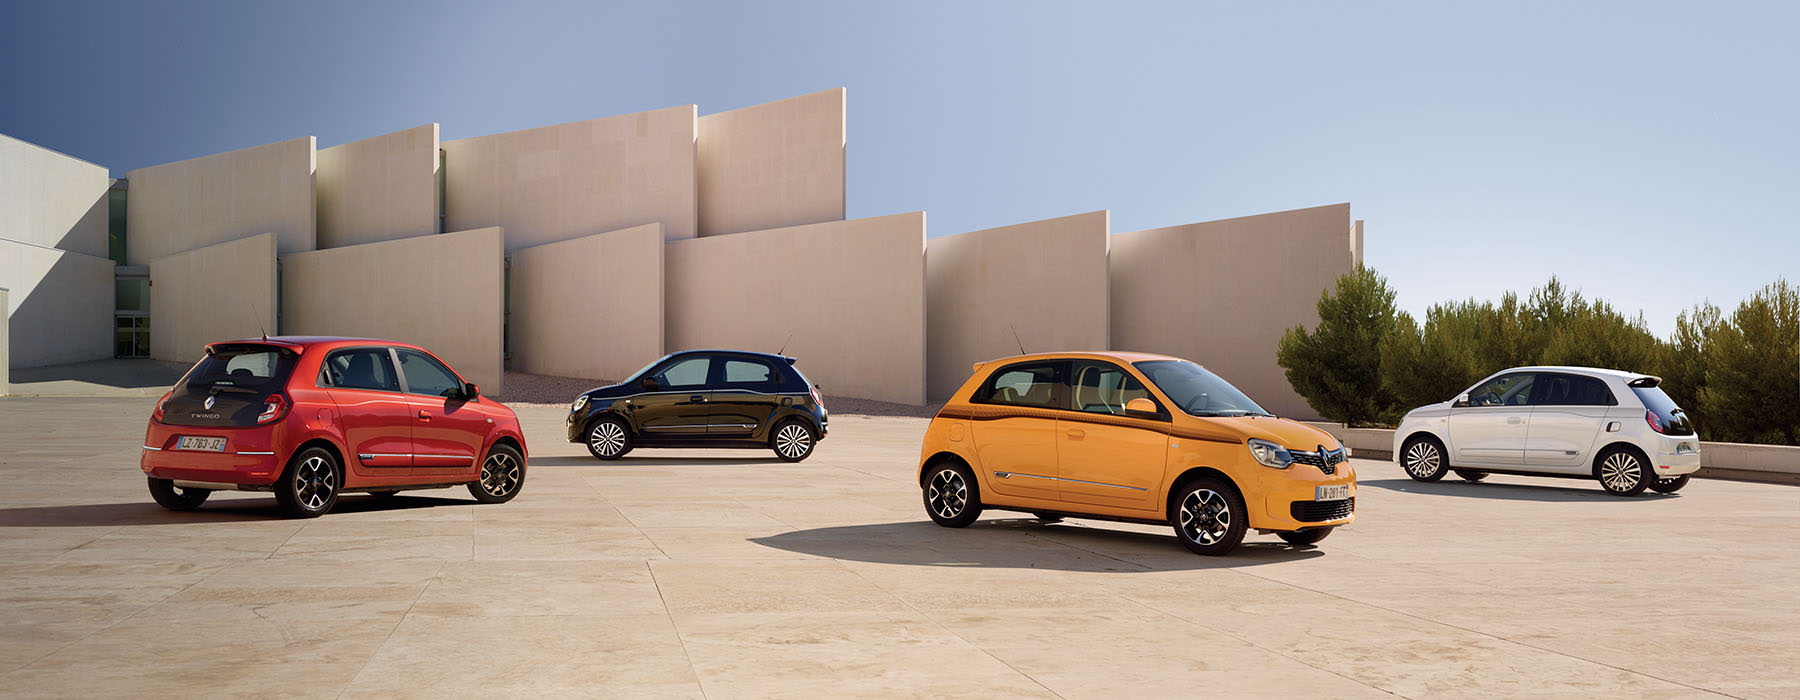 Occasion : Quelle Renault Twingo 3 choisir ?